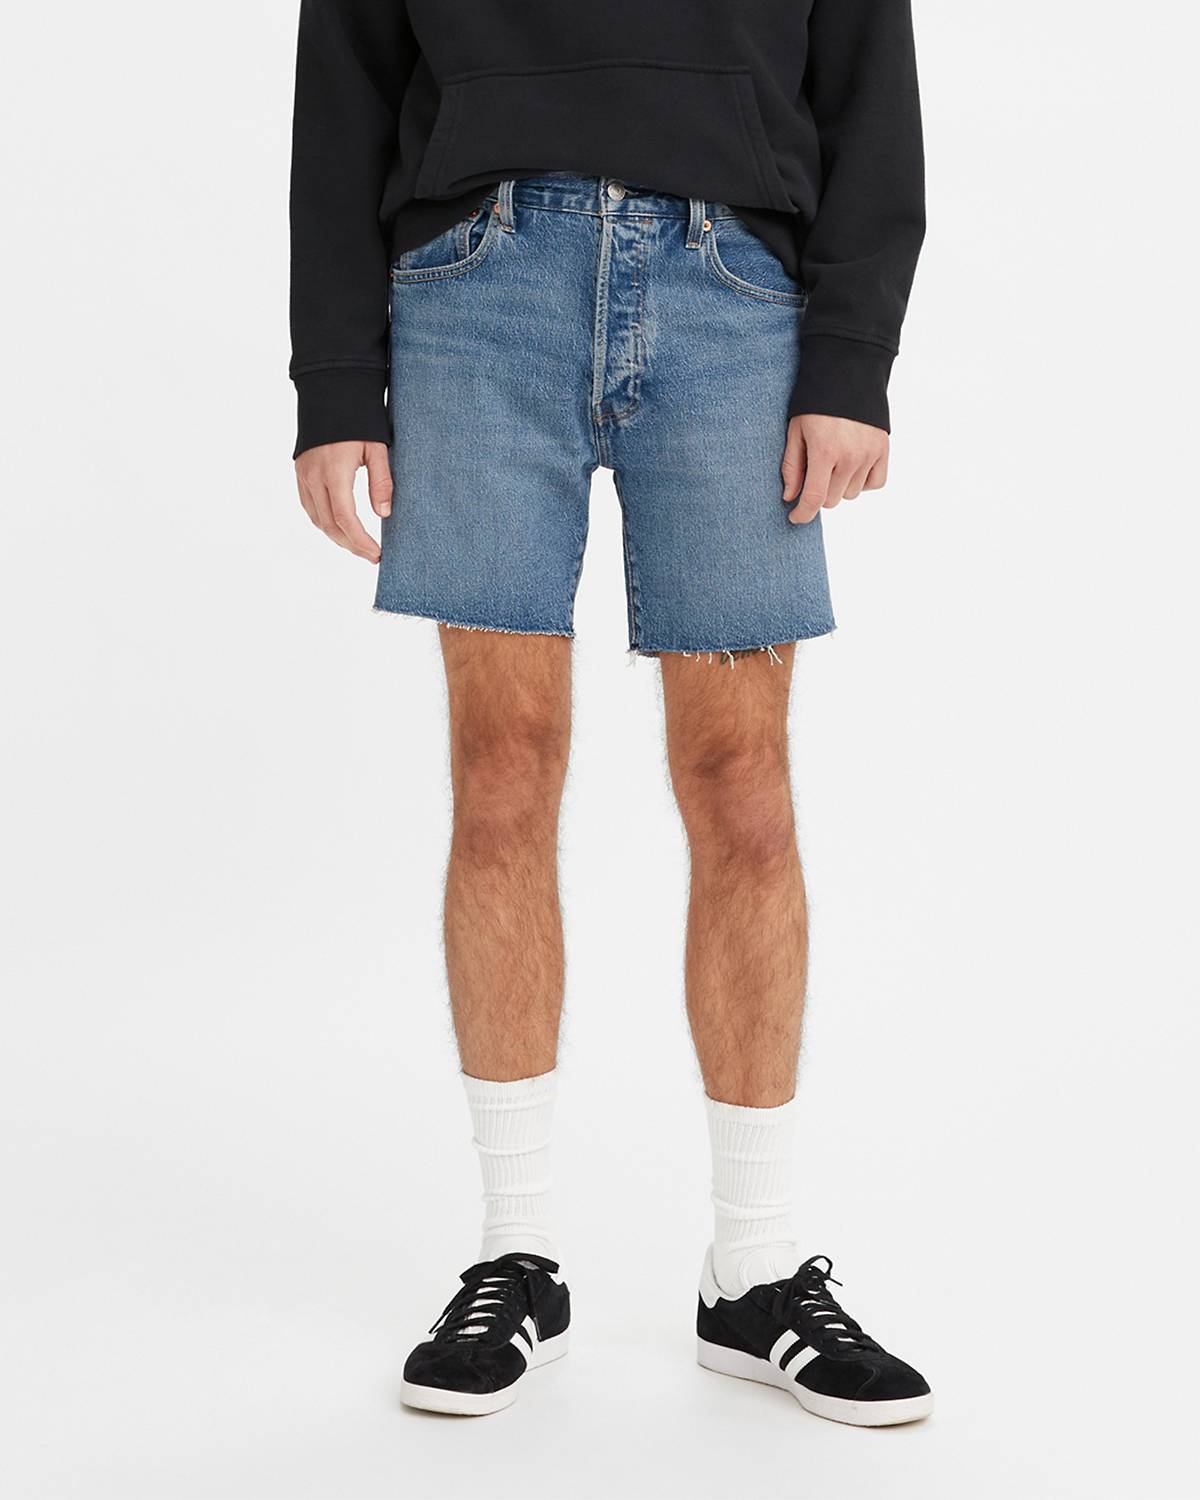 Model wearing 501® '93 shorts